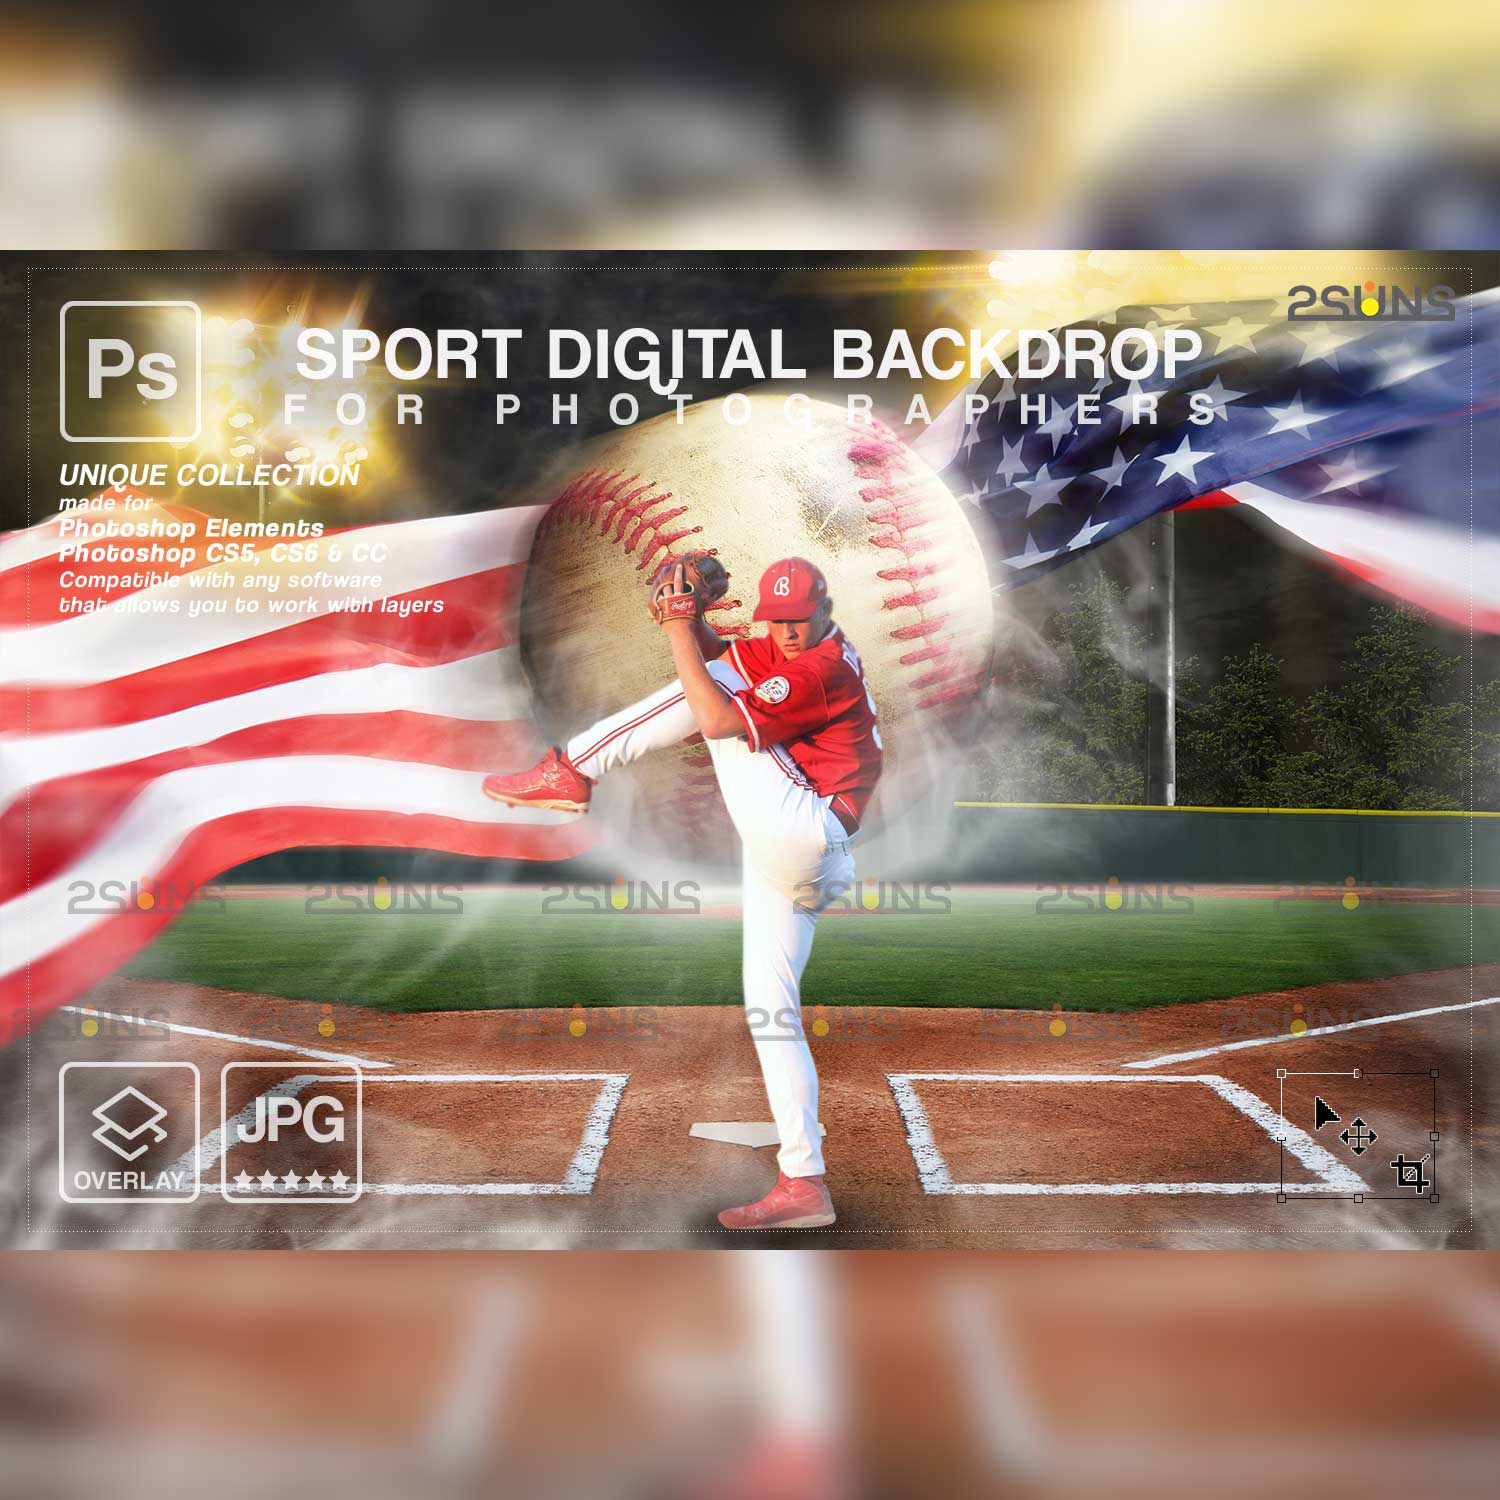 american flag background photoshop